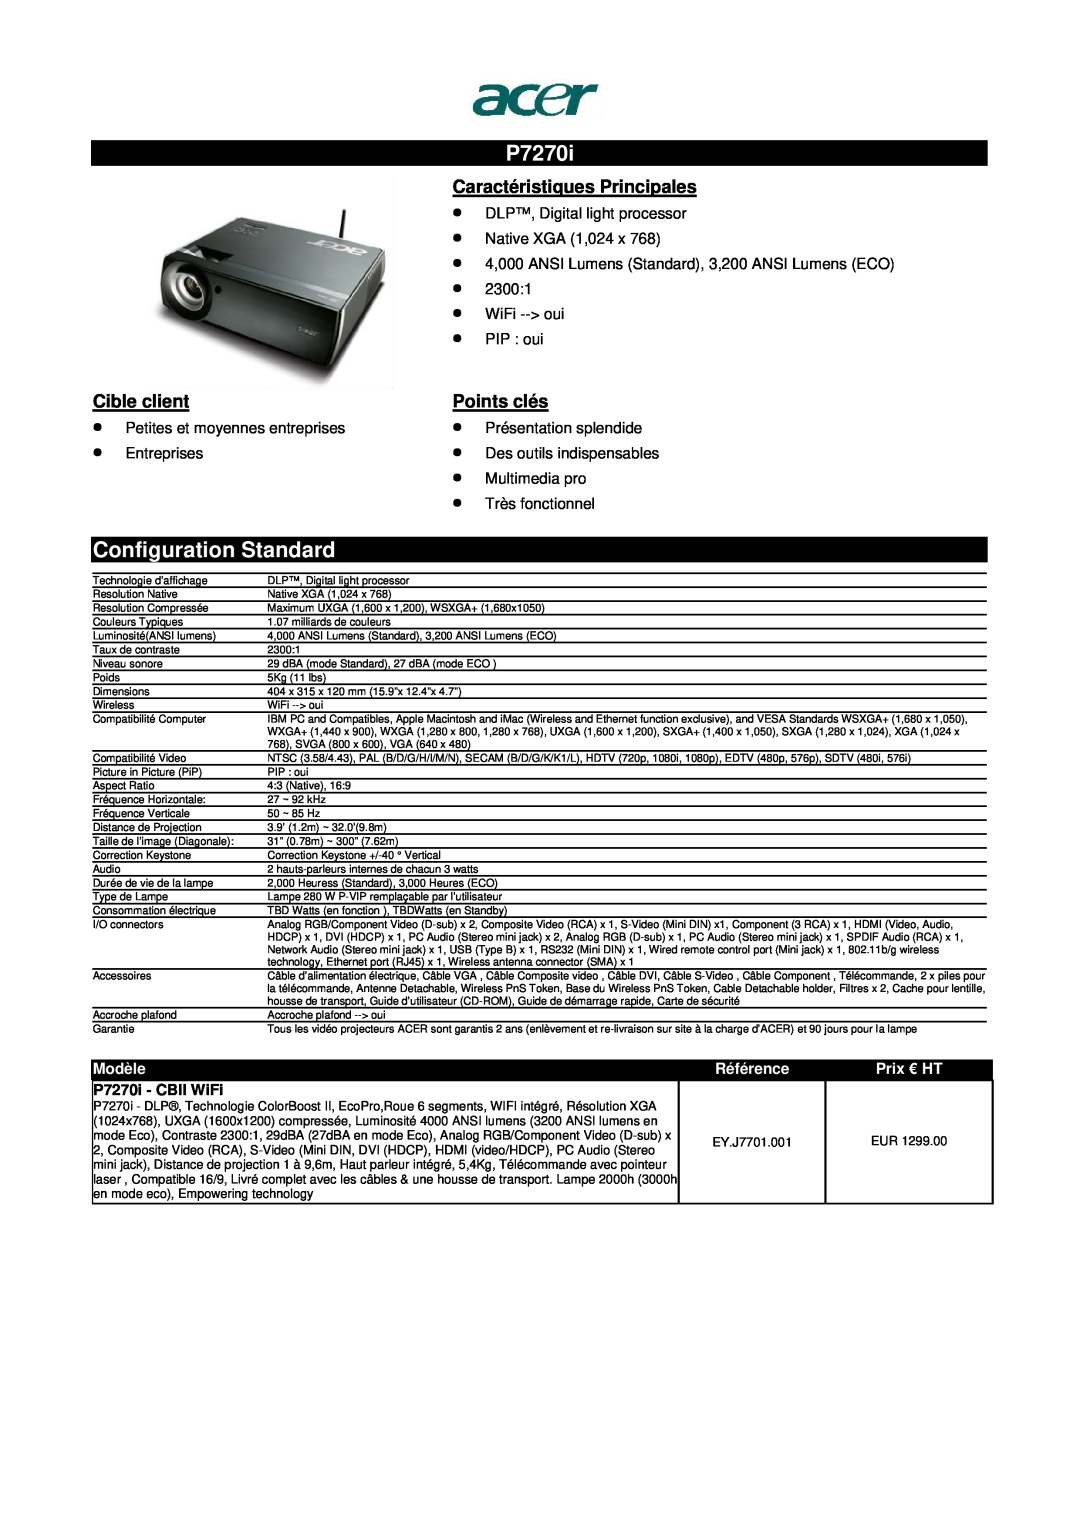 Acer S1200 P7270i, 4,000 ANSI Lumens Standard, 3,200 ANSI Lumens ECO, WiFi -- oui PIP oui, Présentation splendide, Modèle 